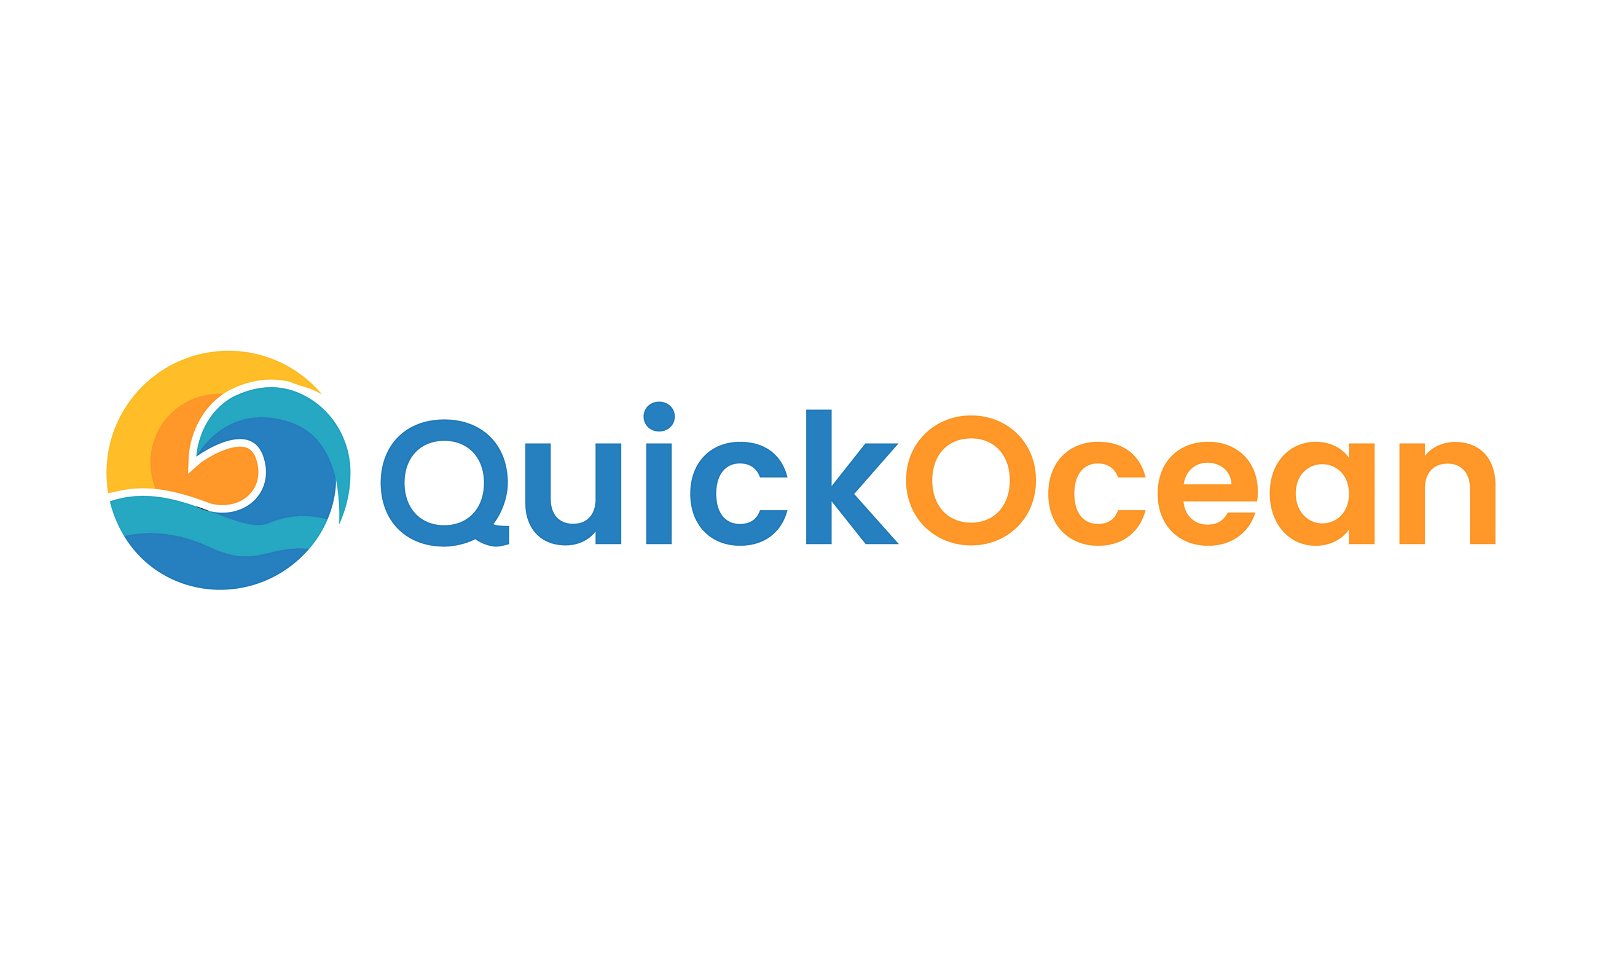 QuickOcean.com - Creative brandable domain for sale